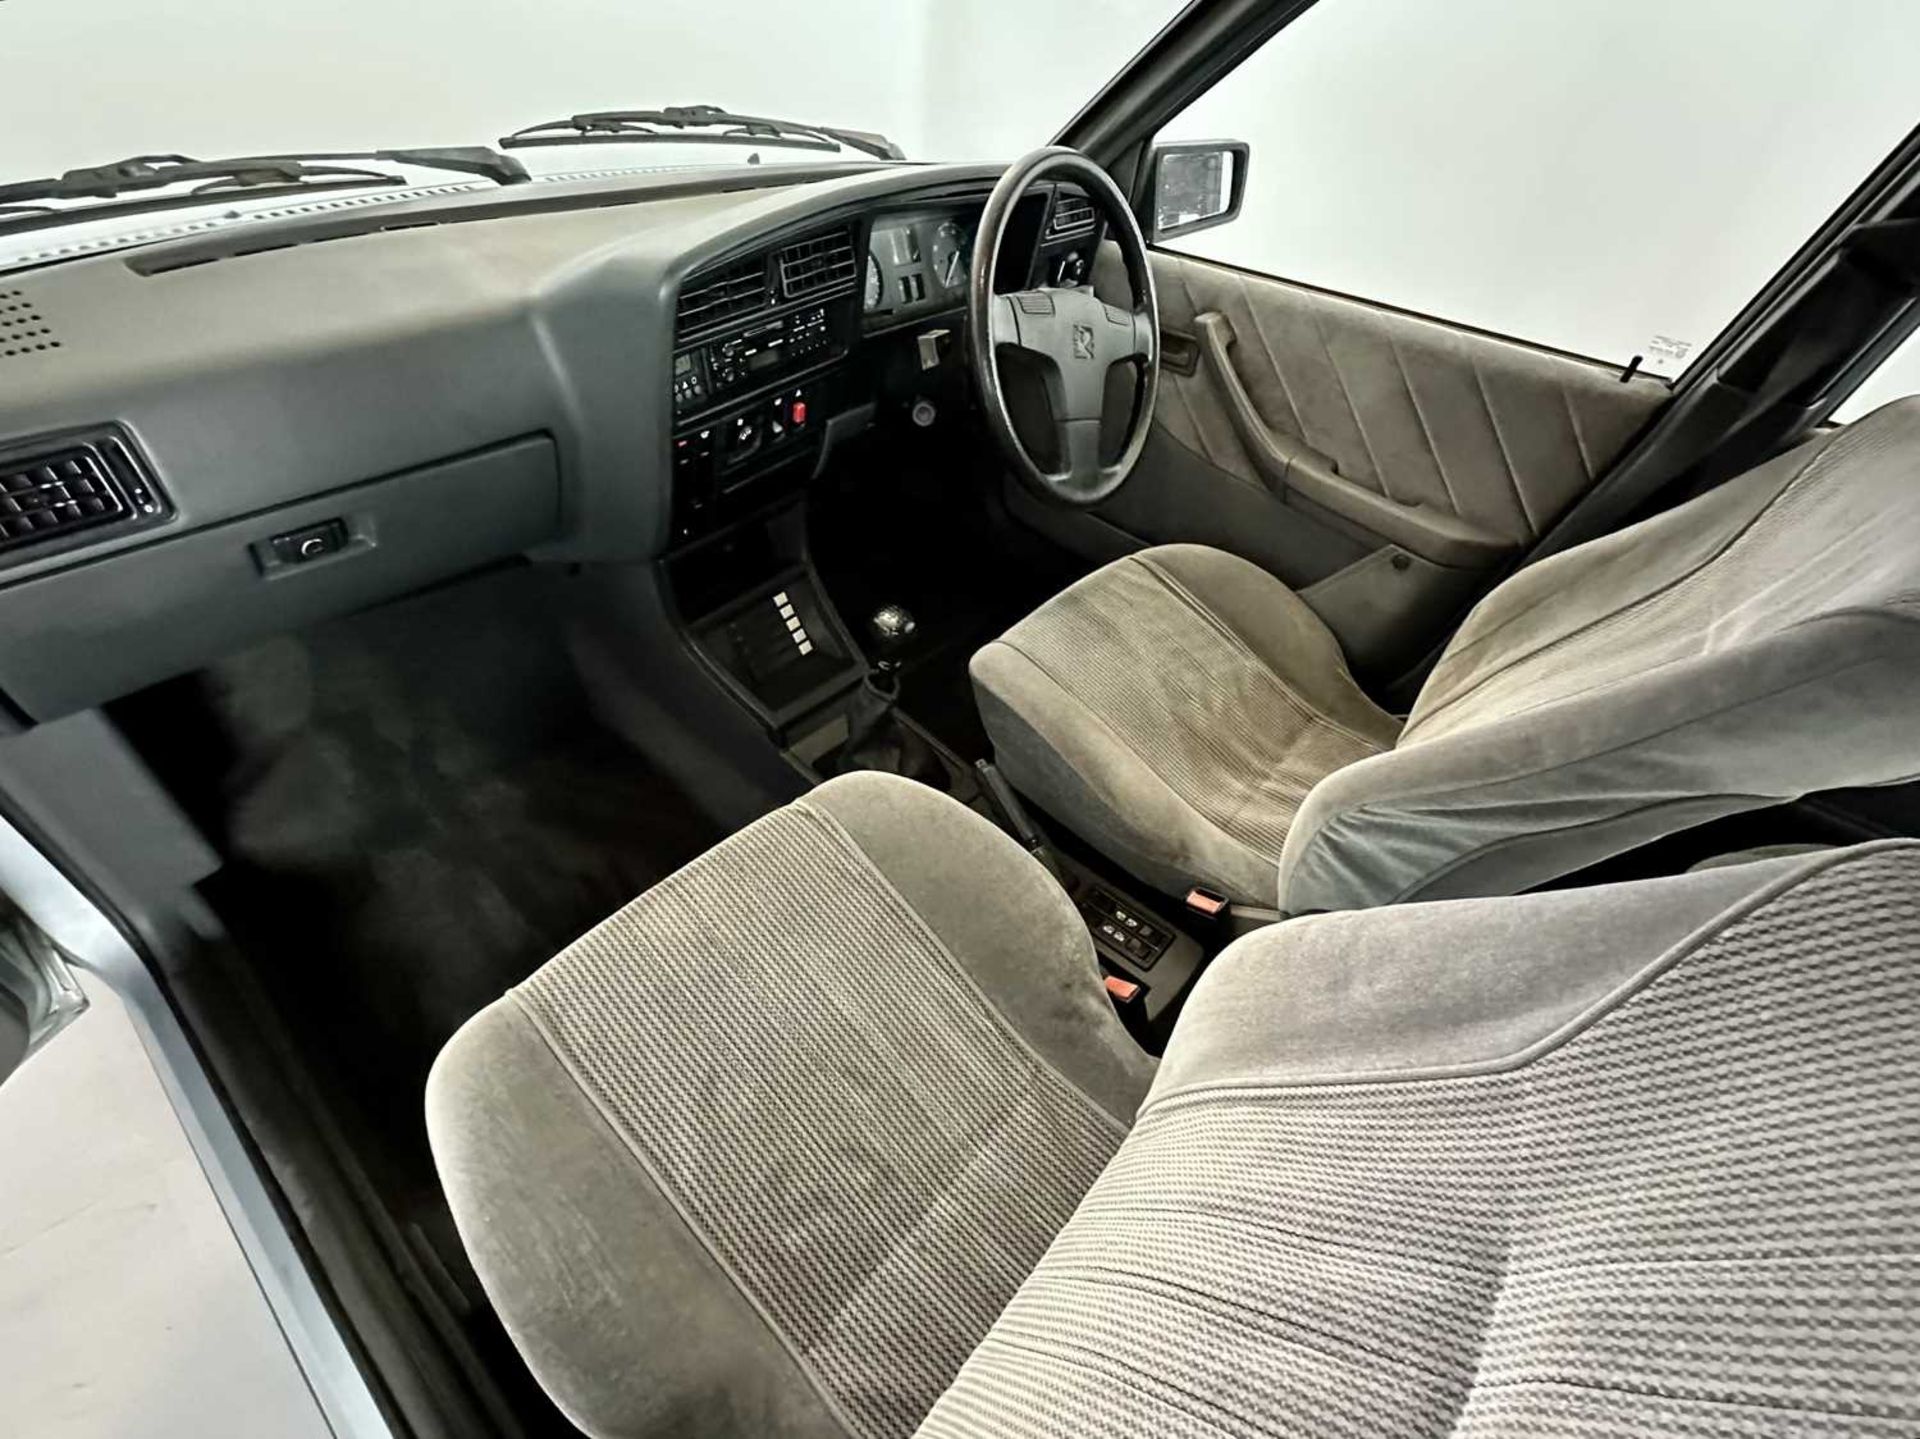 1988 Vauxhall Cavalier - Image 28 of 34